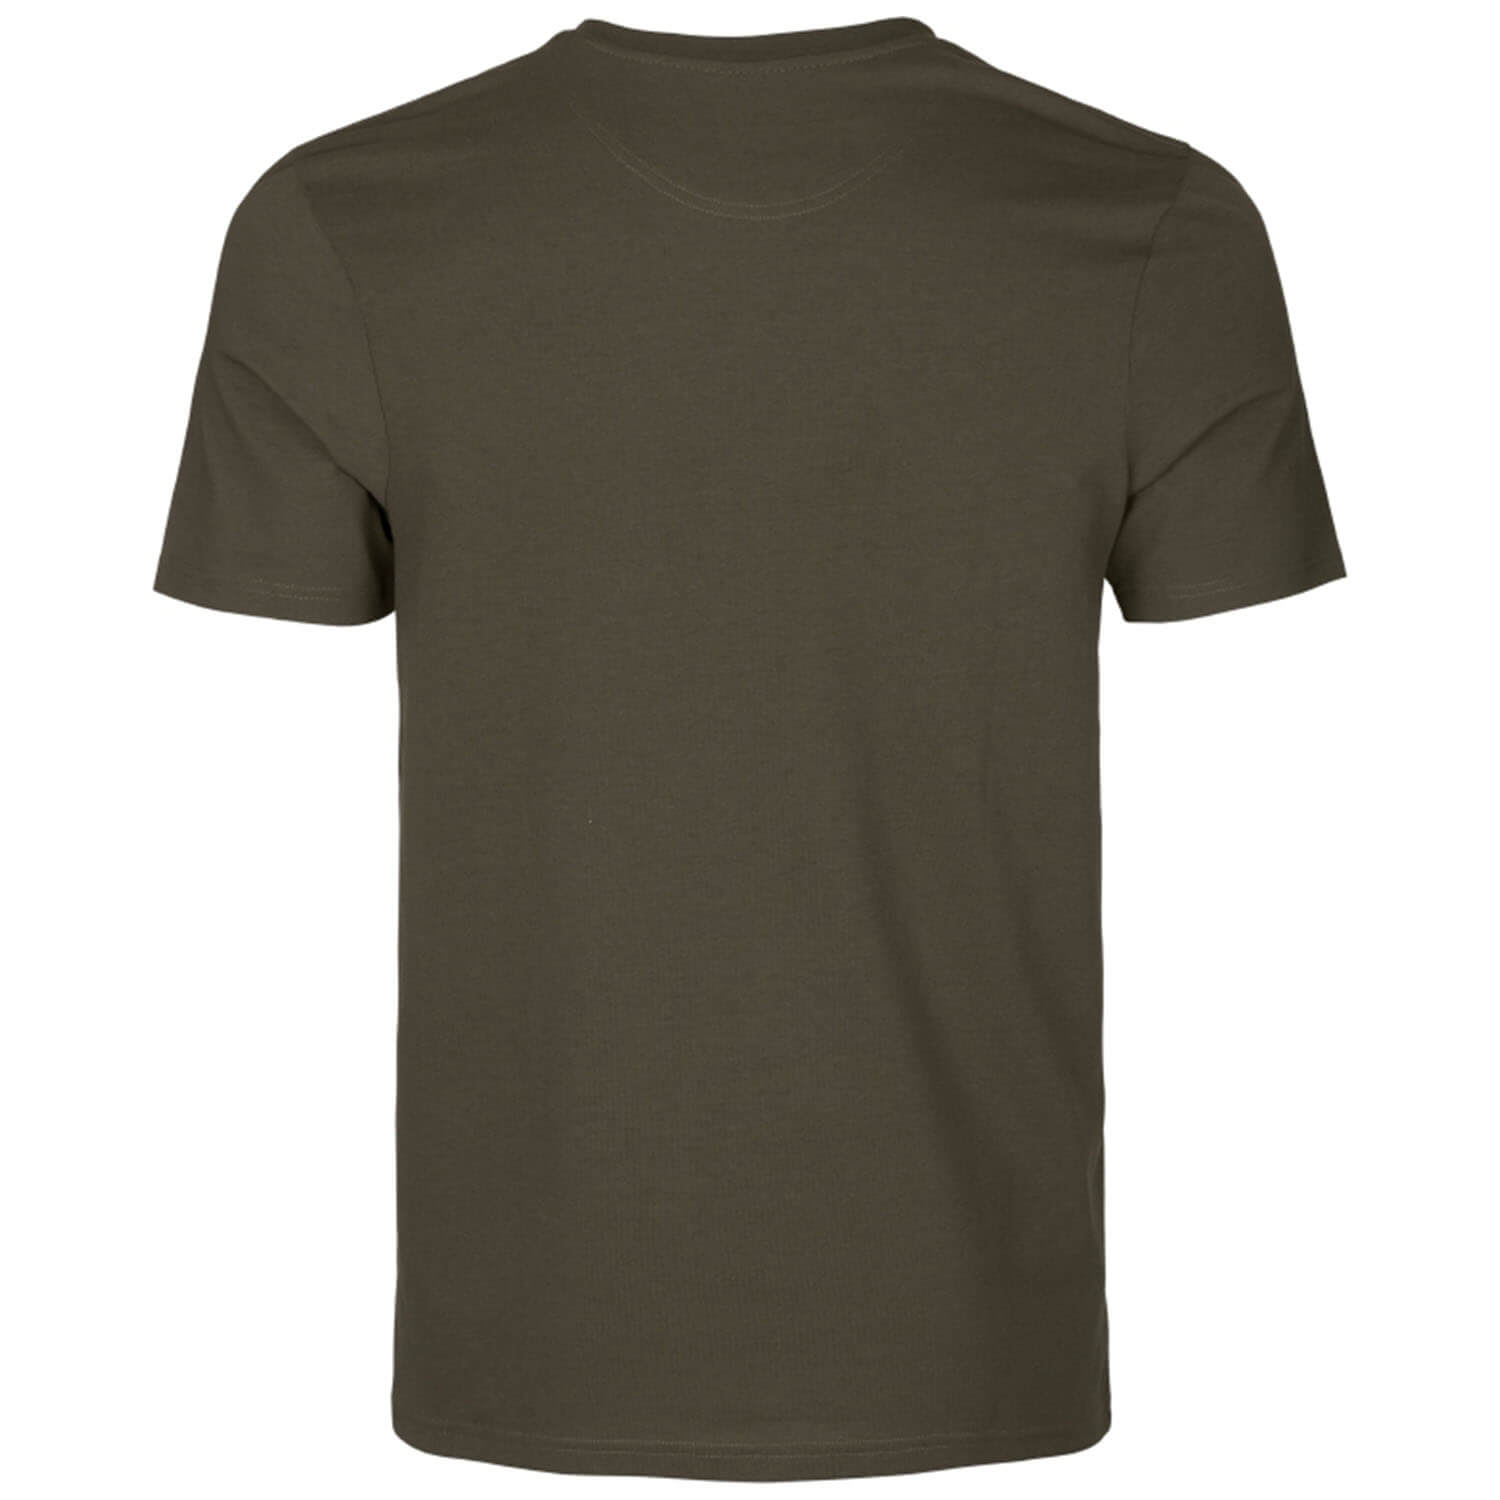  Seeland T-Shirt Torenvalk (Grizzly Bruin)